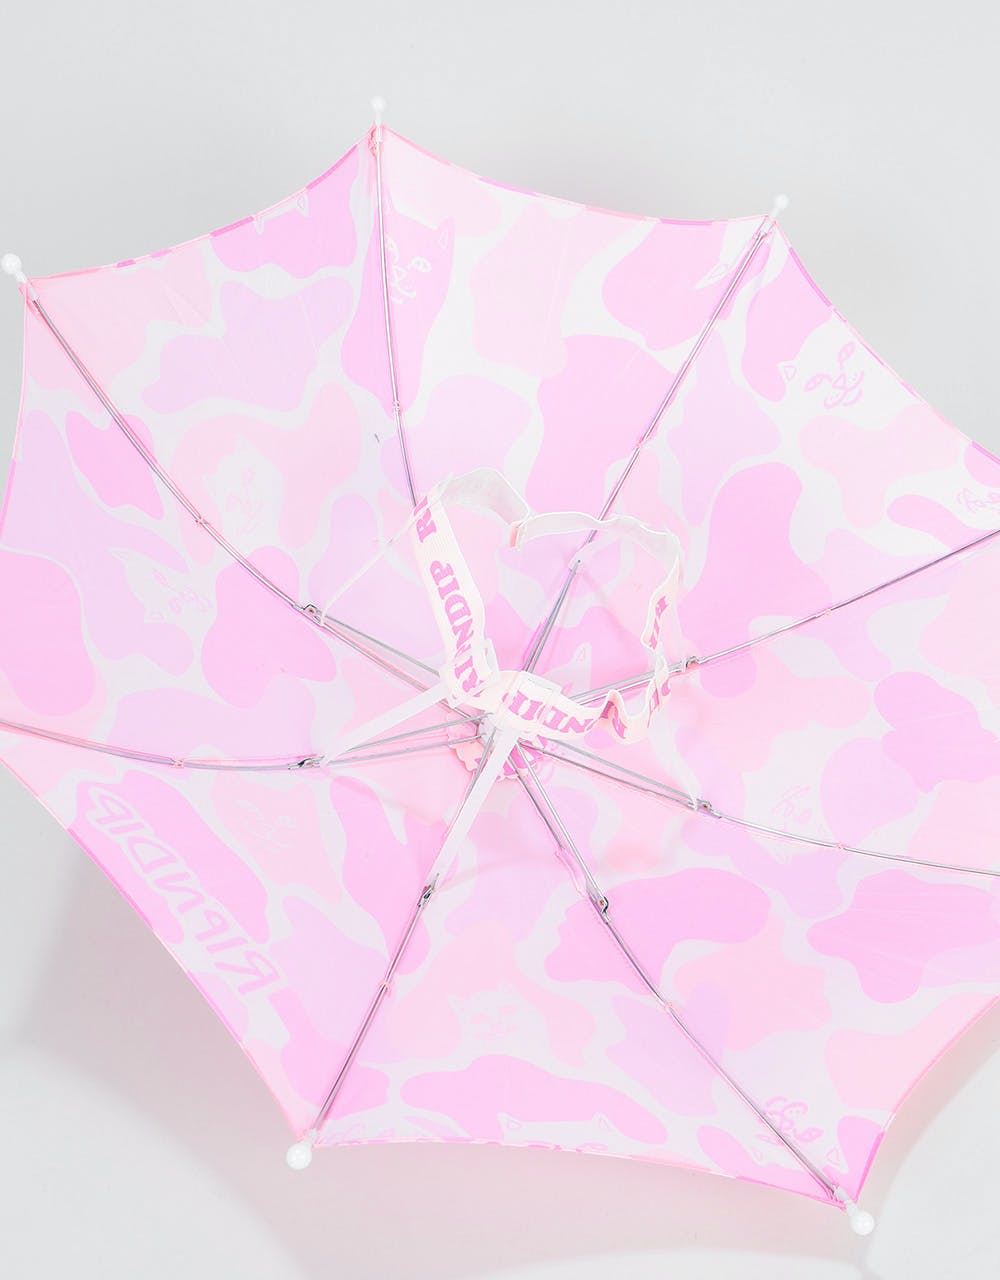 RIPNDIP Real Shadey Umbrella Hat - Pink Camo